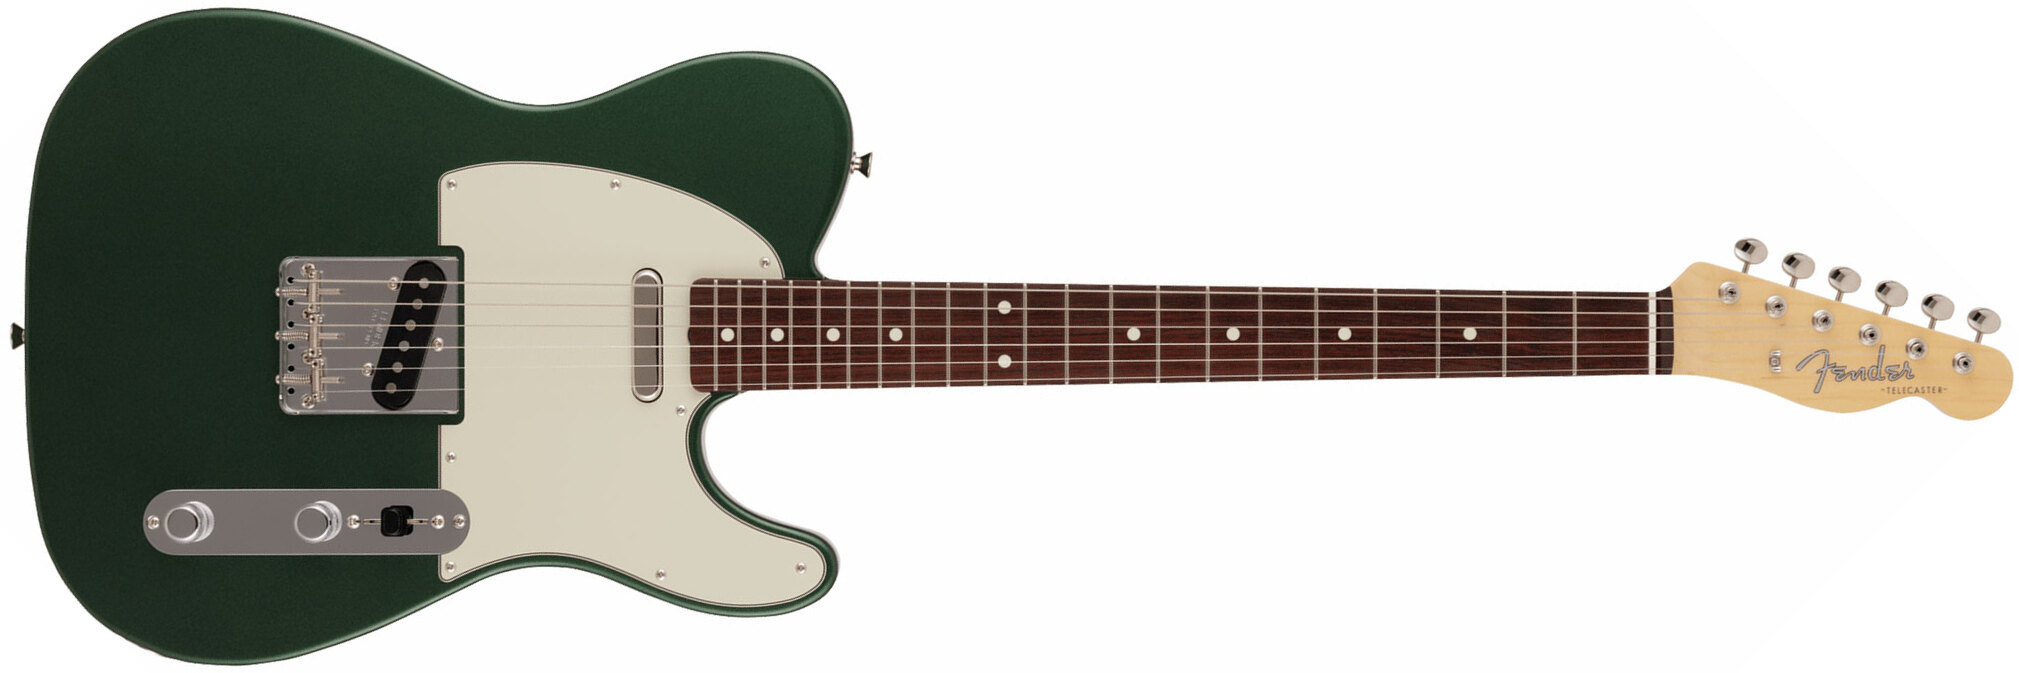 Fender Tele Traditional 60s Mij 2s Ht Rw - Aged Sherwood Green Metallic - E-Gitarre in Teleform - Main picture